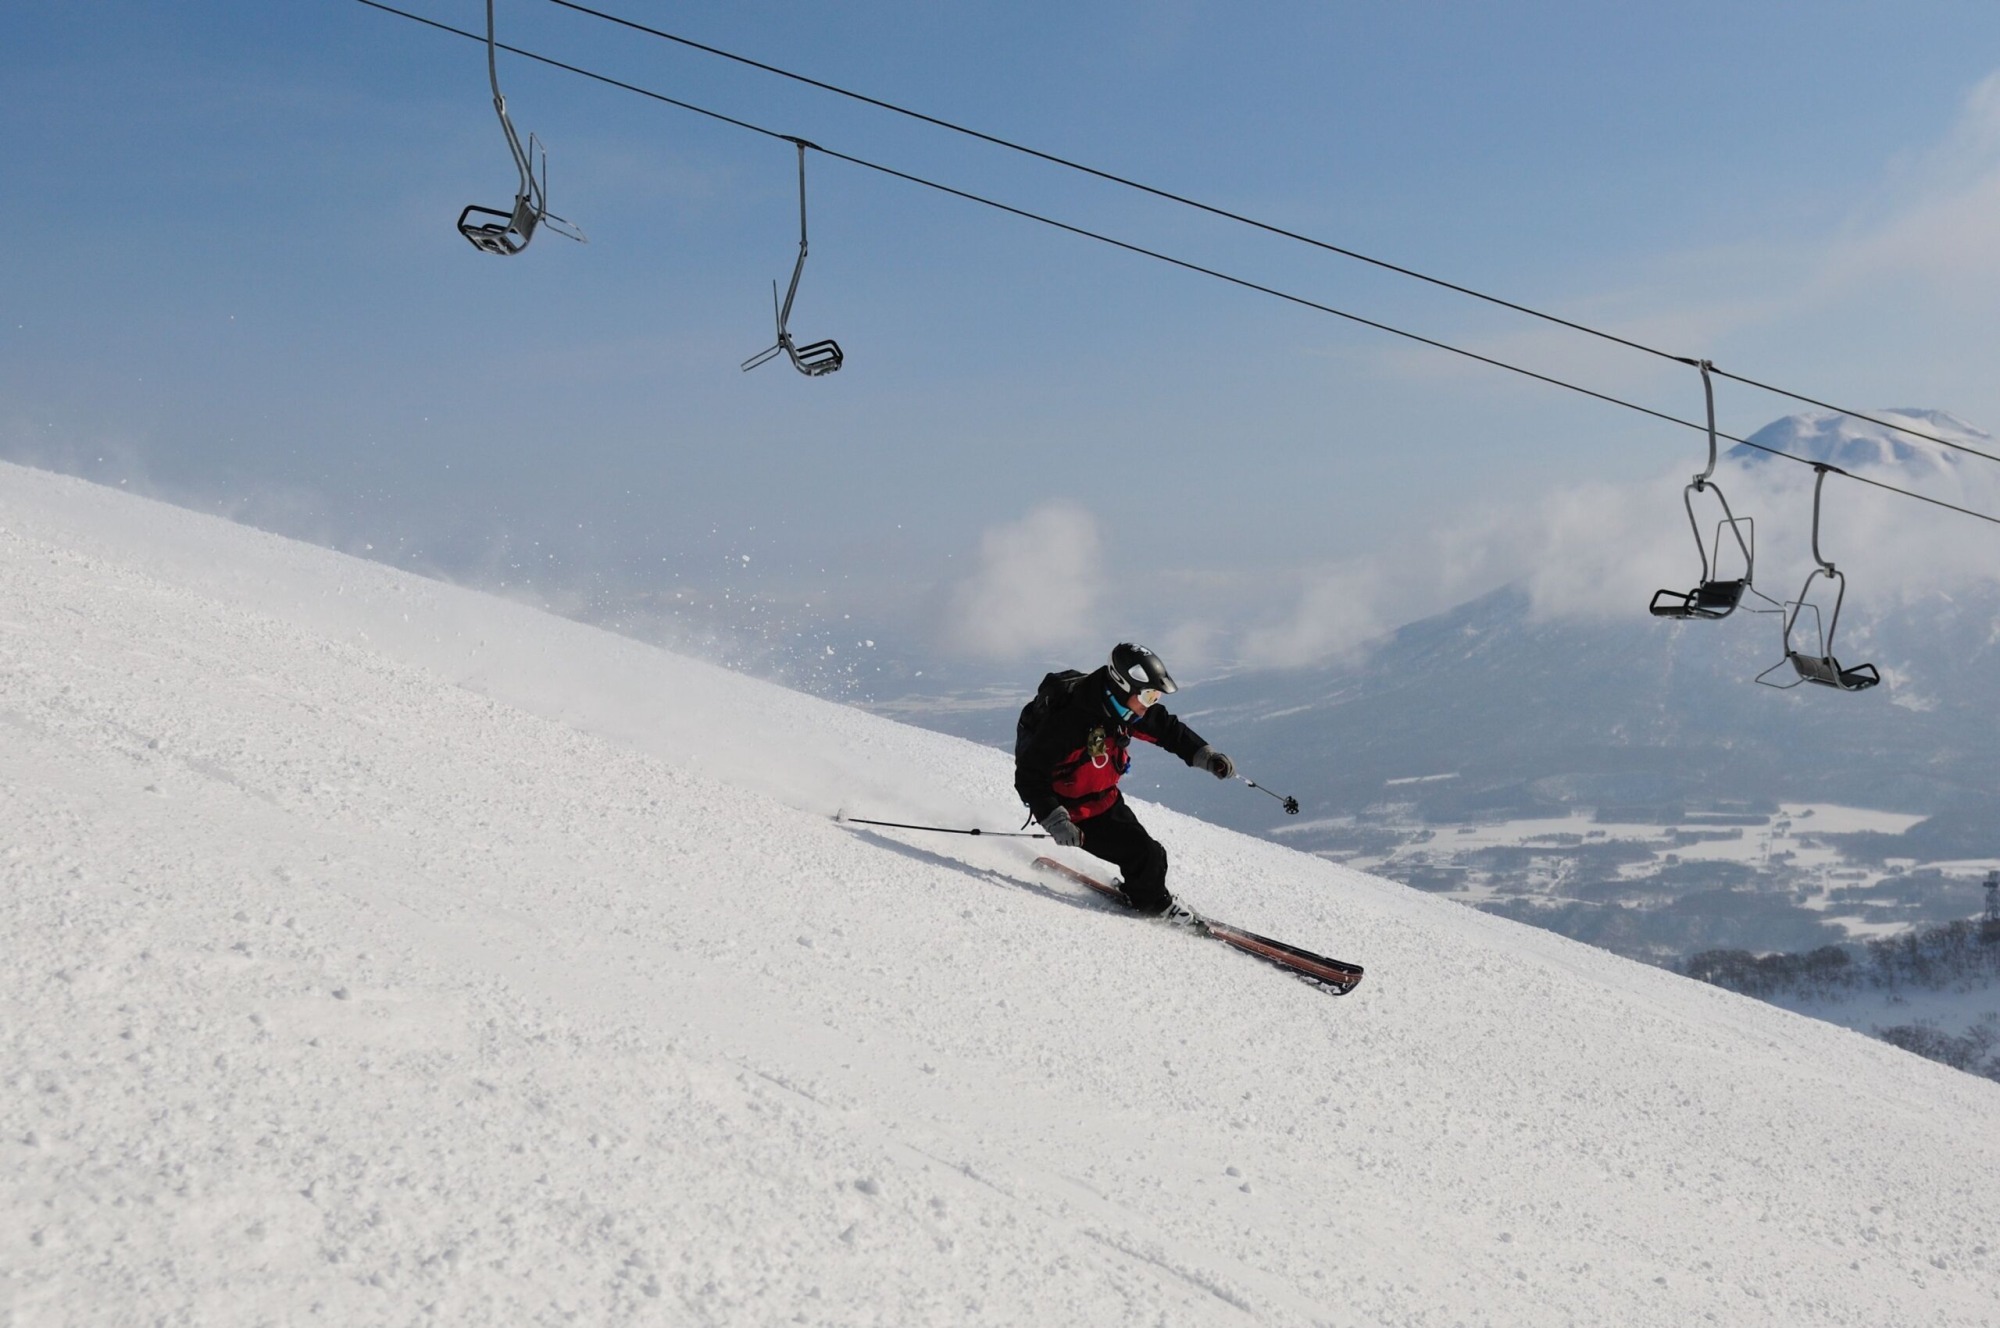 Niseko; a Hub of Distinctive Ski Resorts, Each Blanketed in Japan’s World-Famous Powder Snow